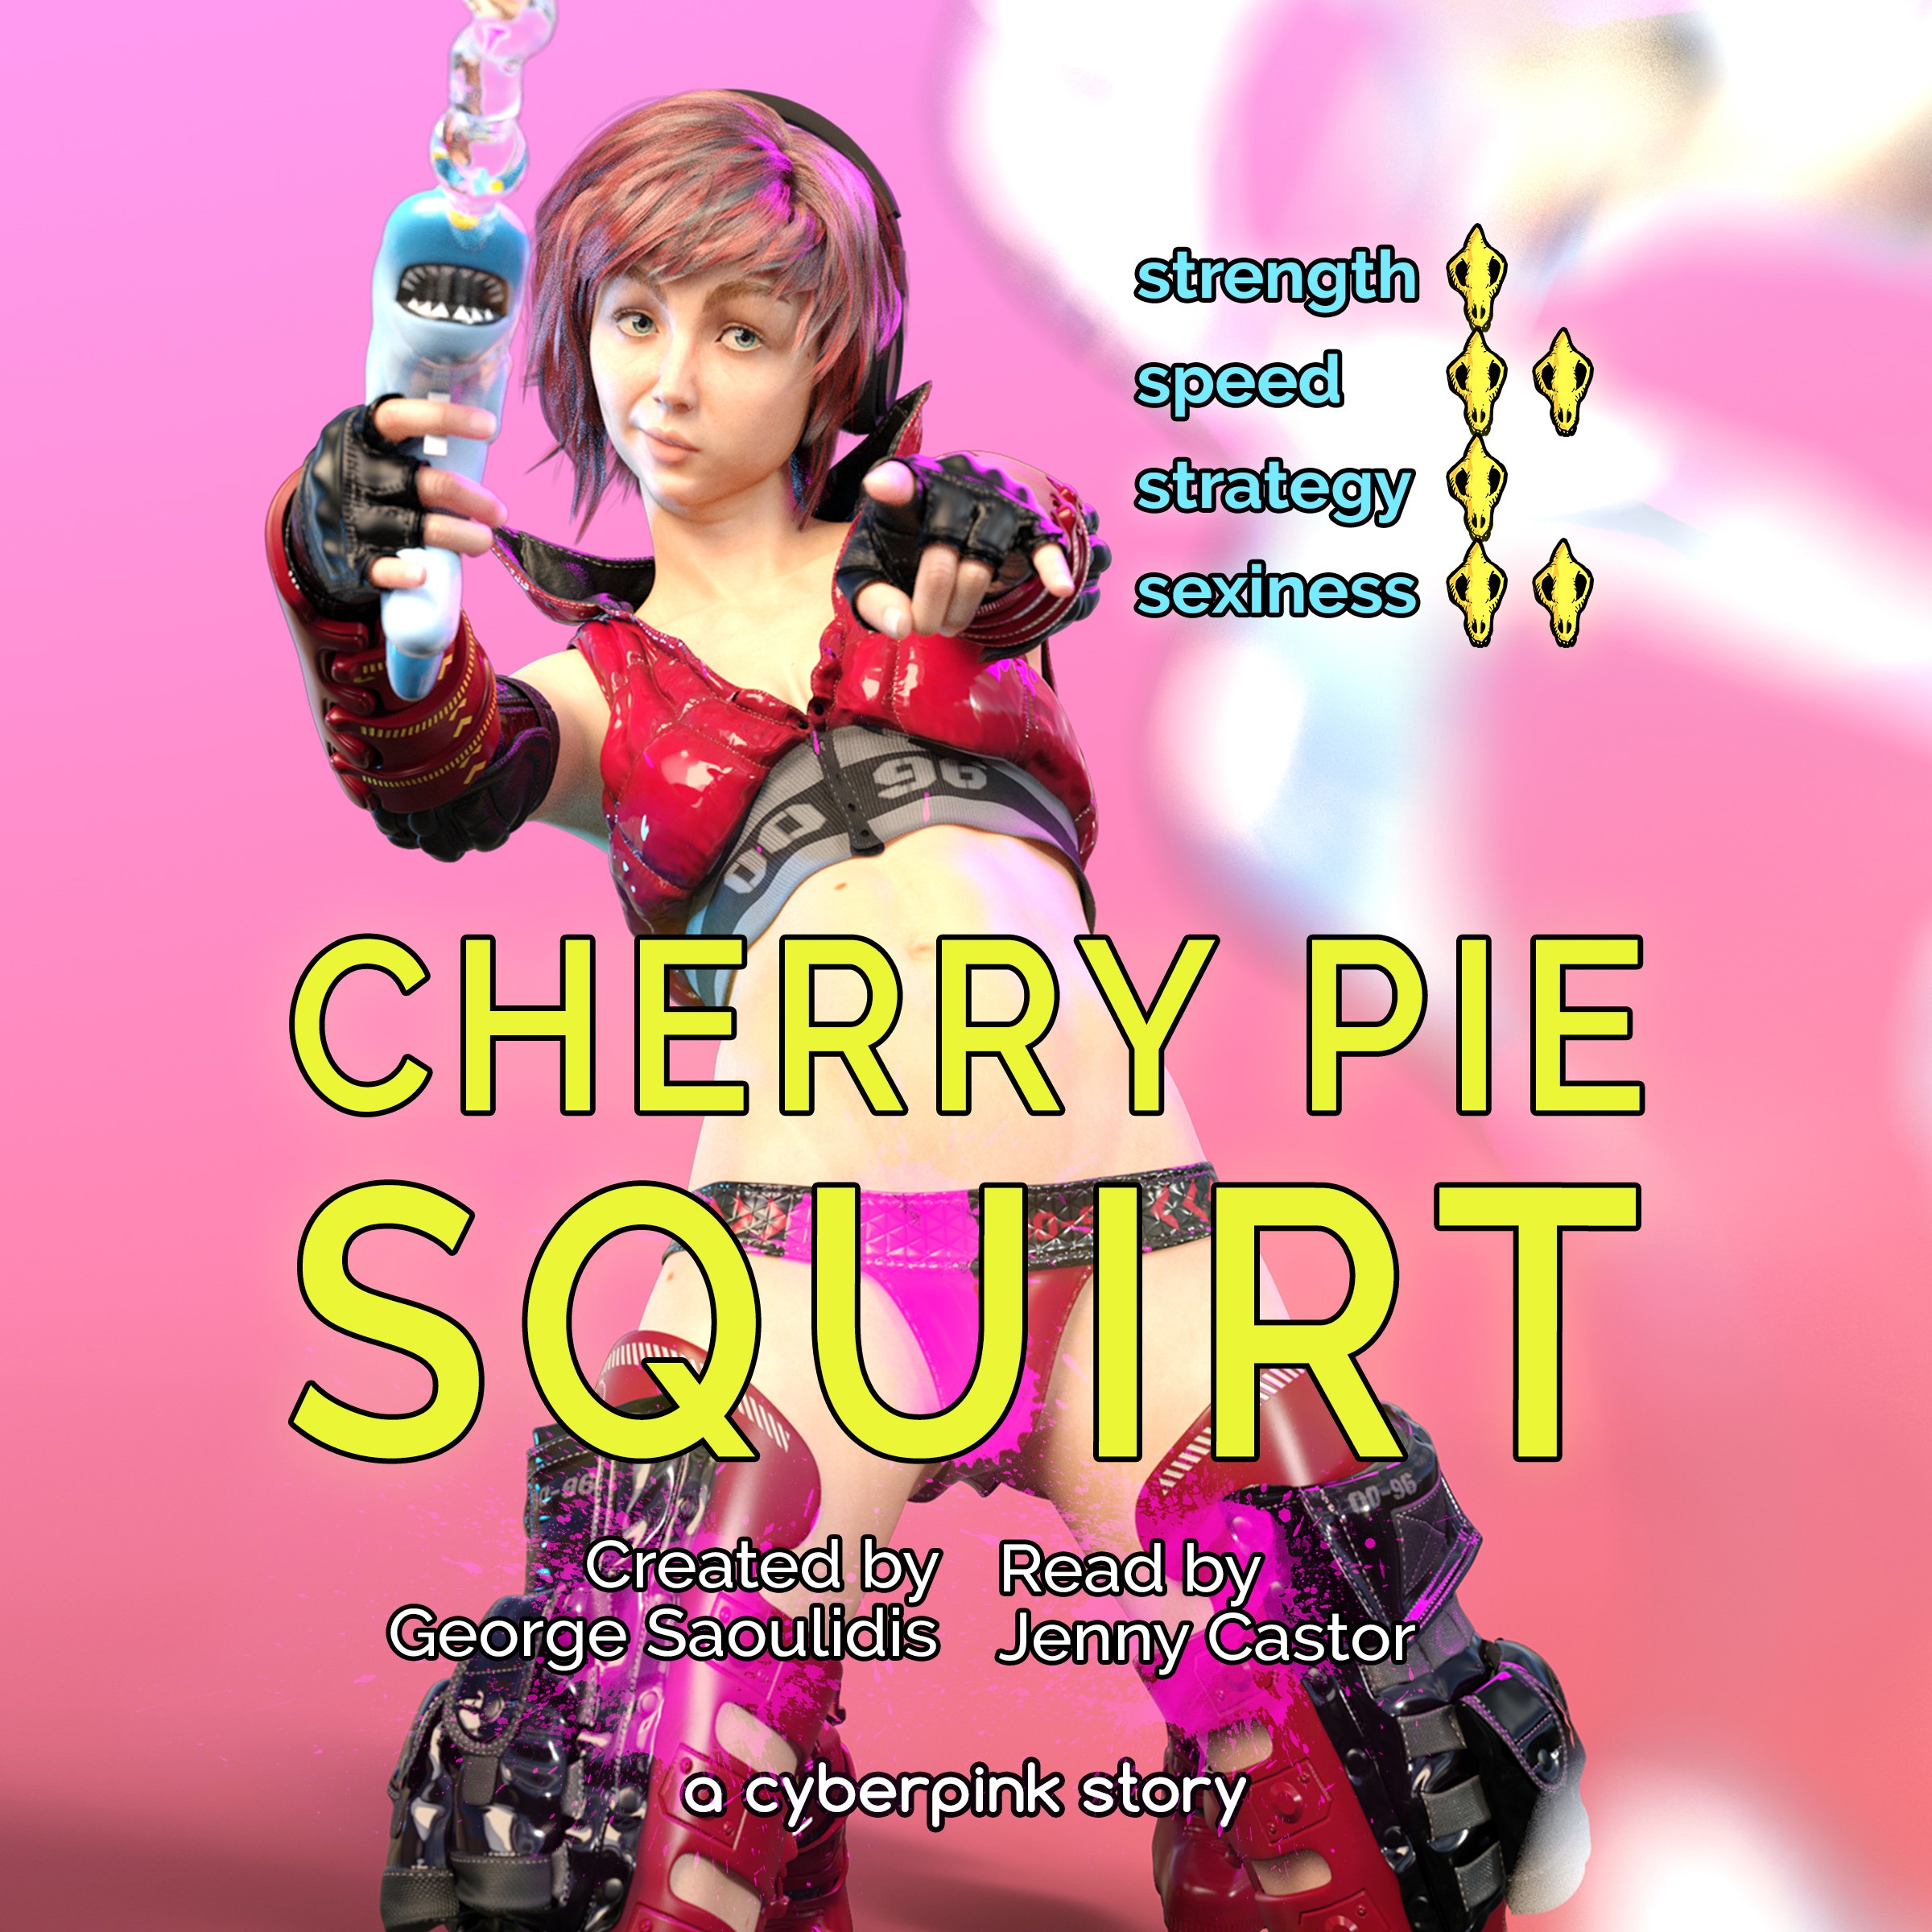 Cherry pie squirt